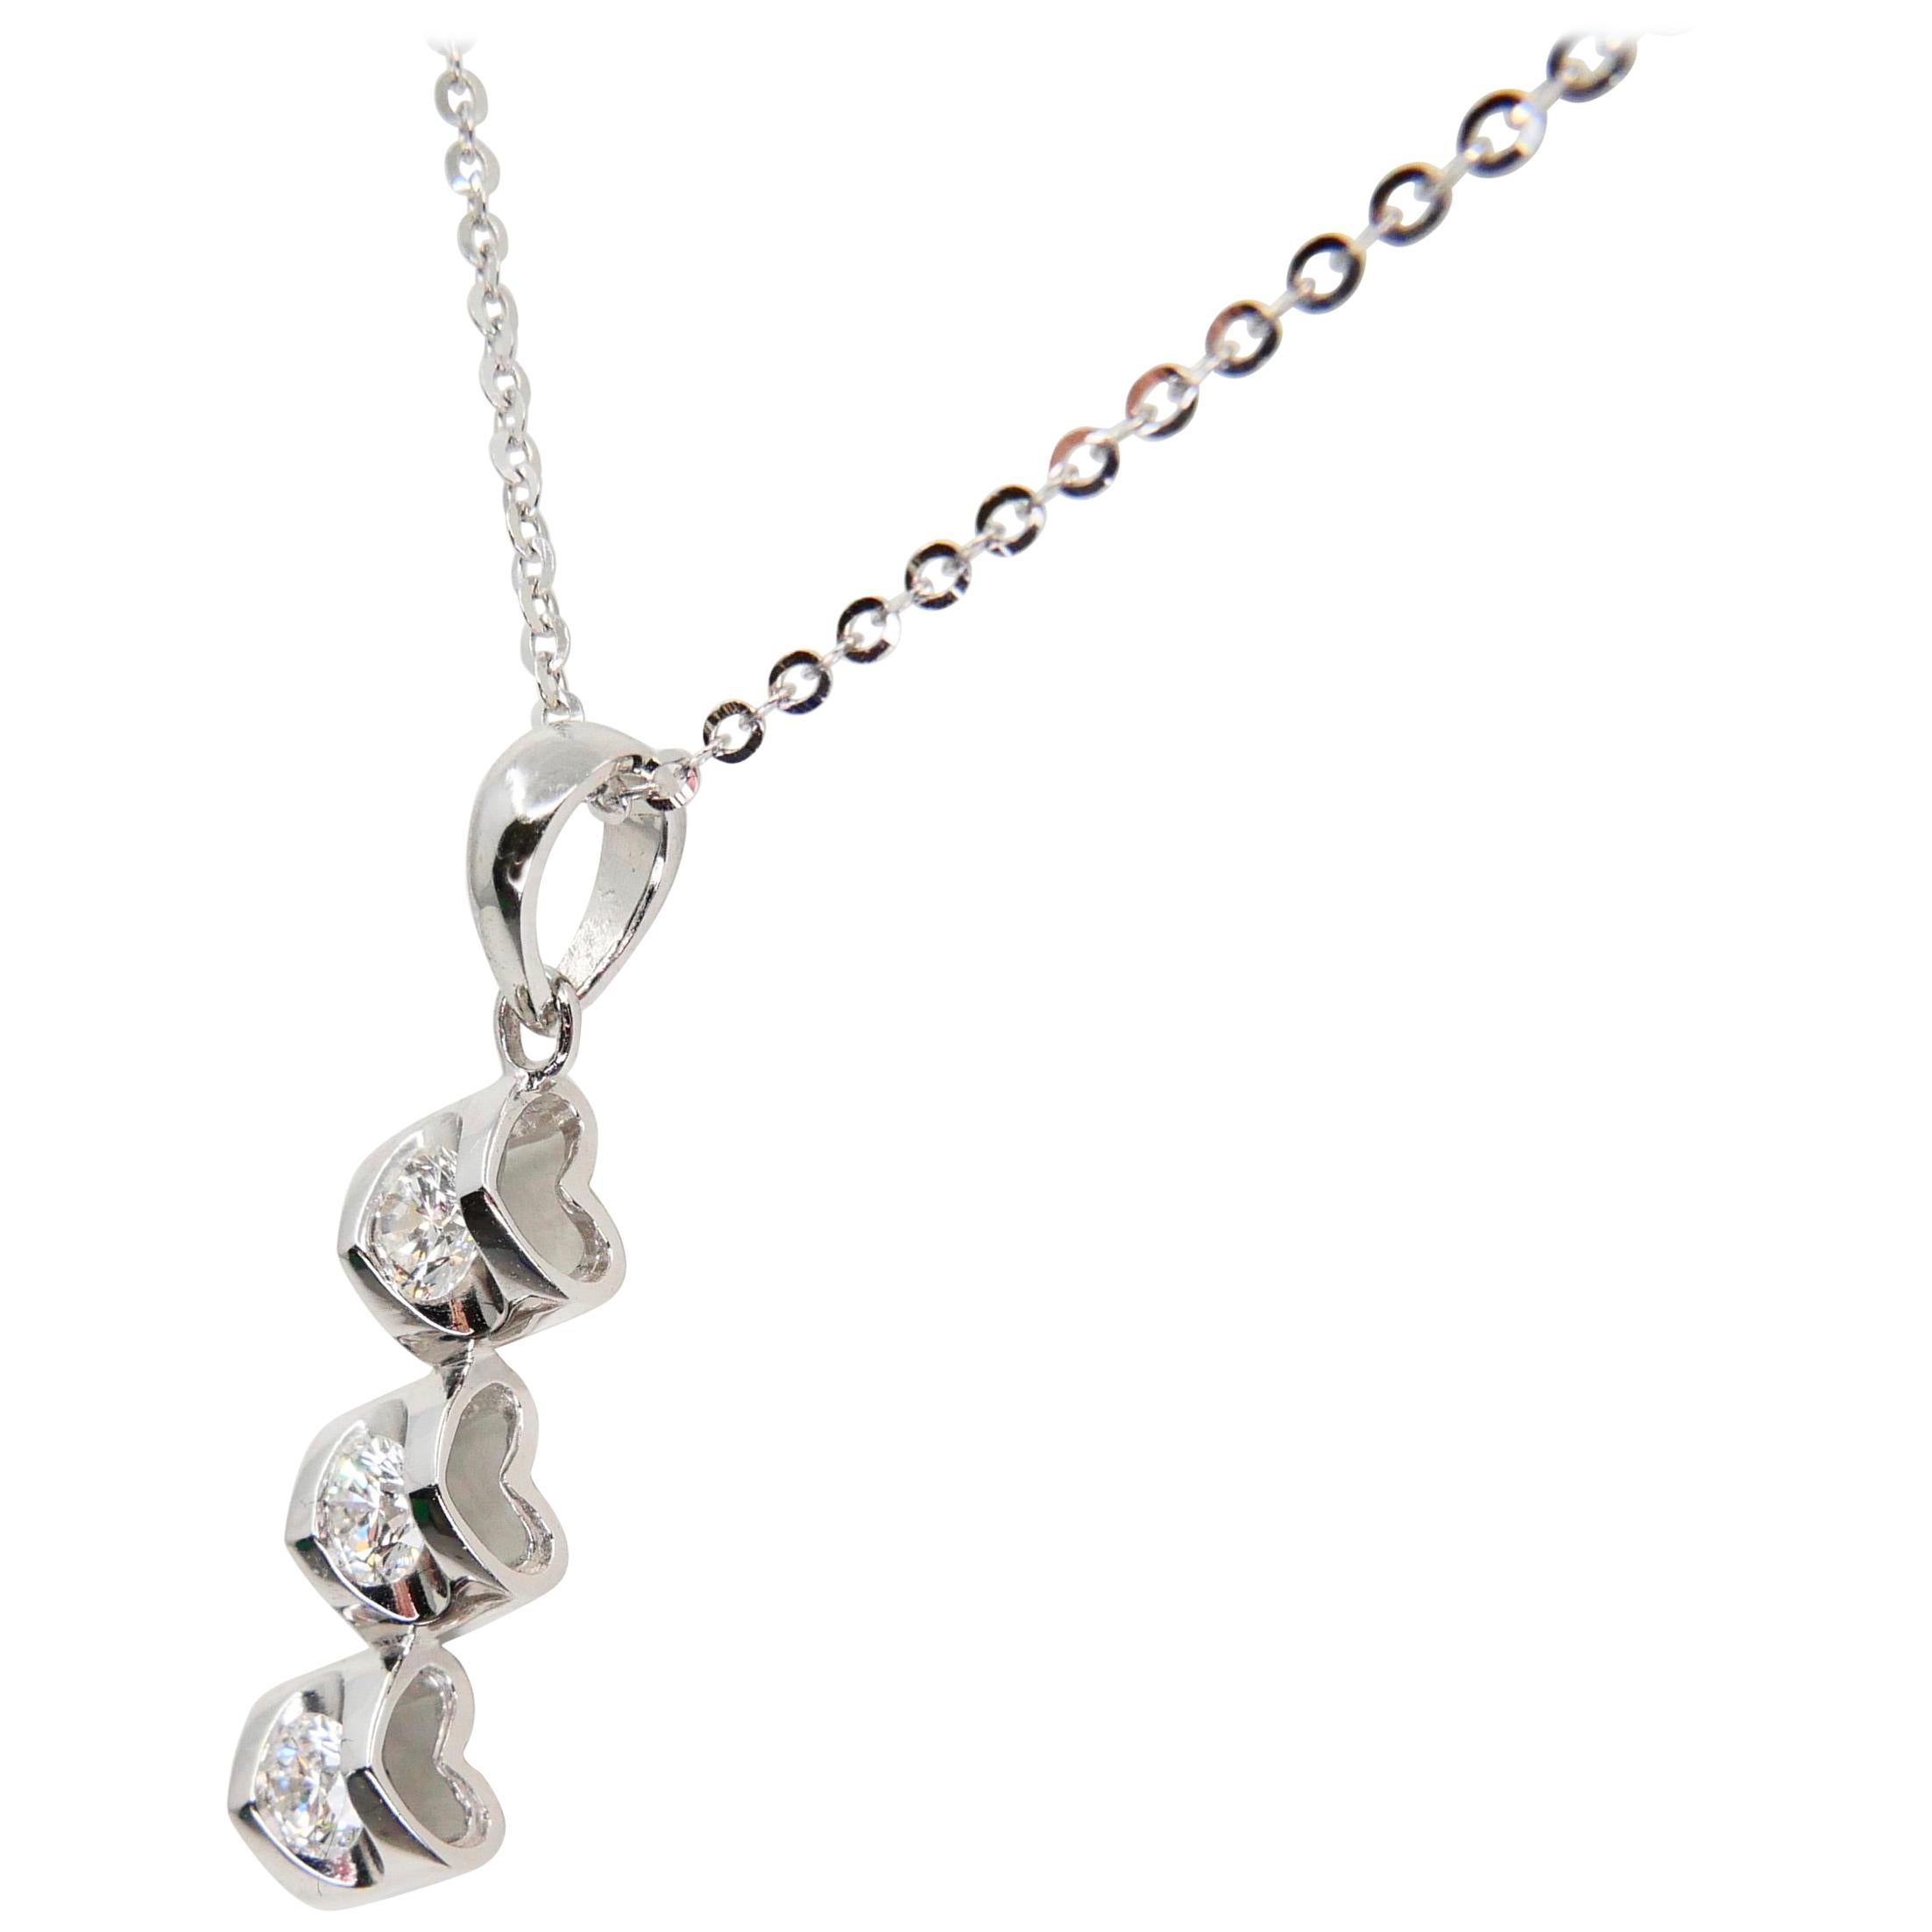 18 Karat White Gold and Diamond Drop Pendant Drop Necklace, Heart Shaped Motif